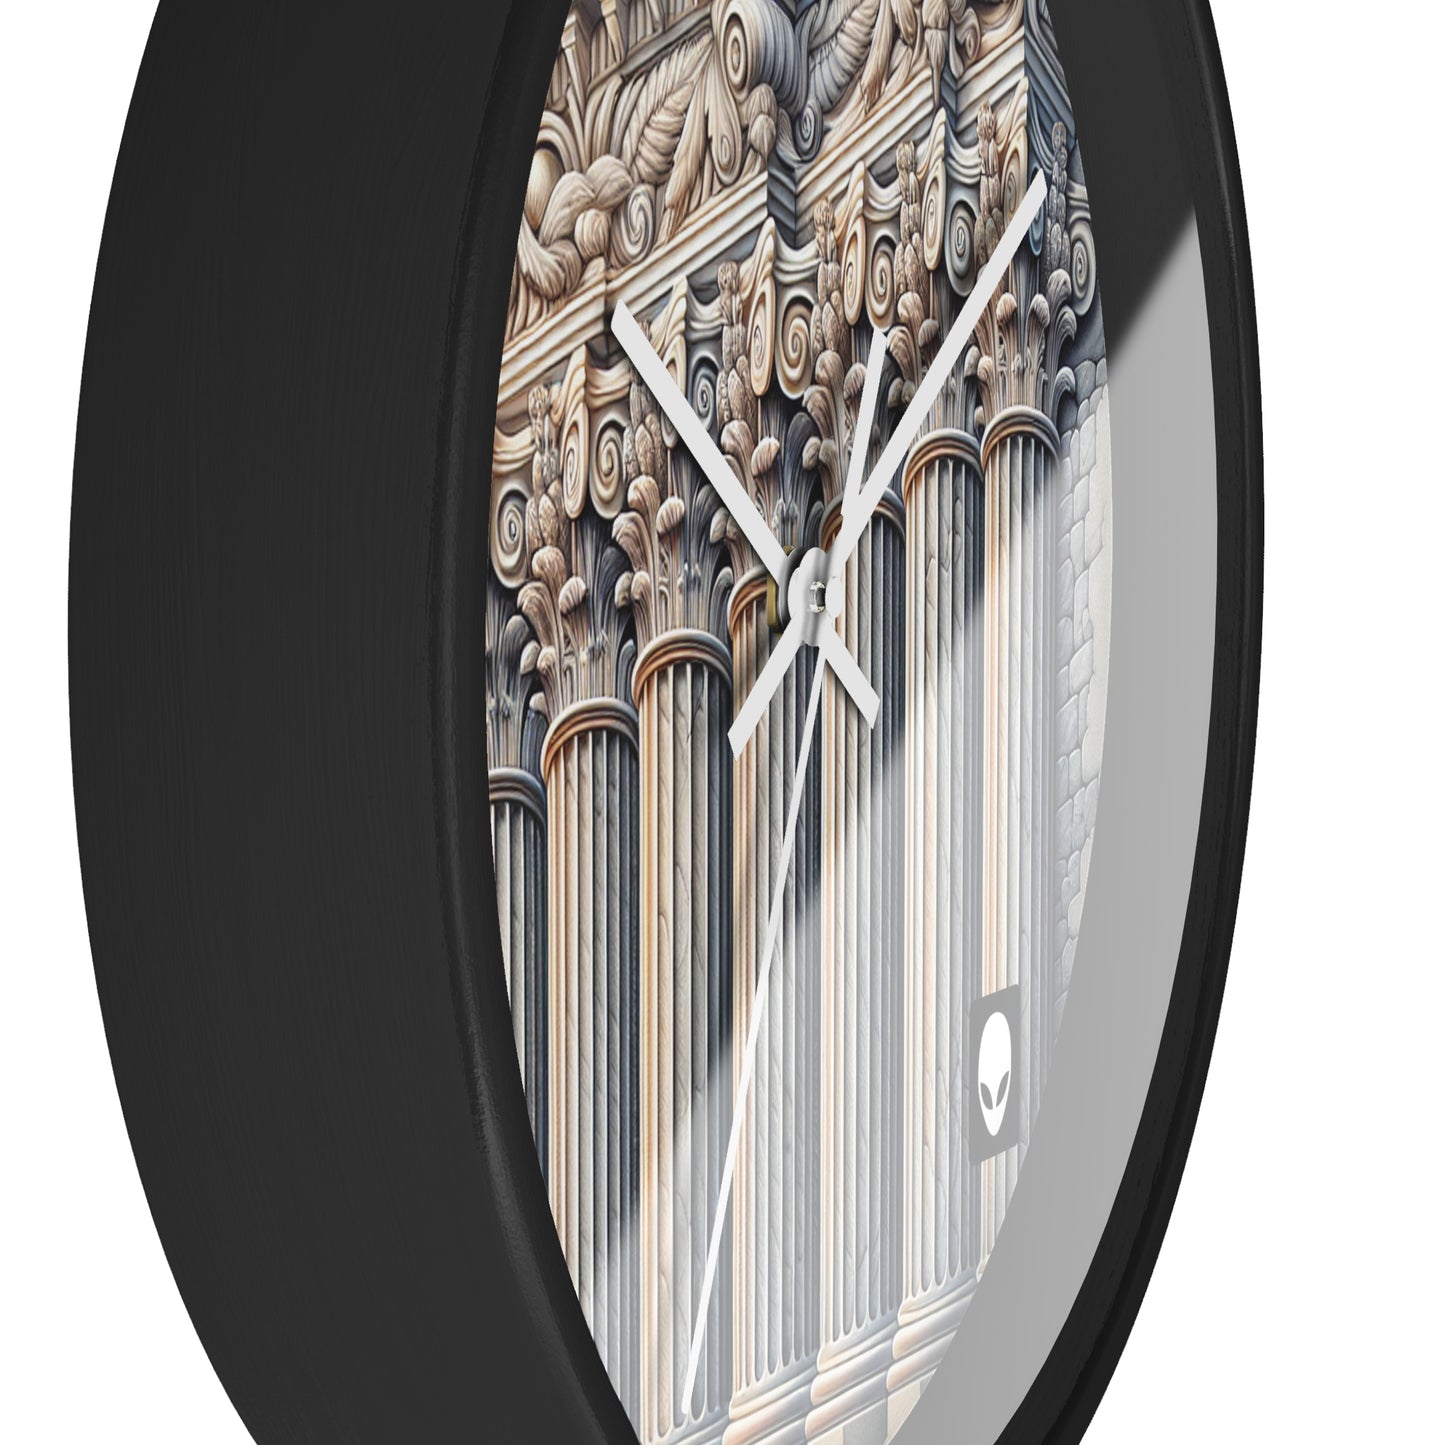 "Columnas de pared 3D: una obra de arte arquitectónica": el reloj de pared alienígena estilo trompe-l'oeil